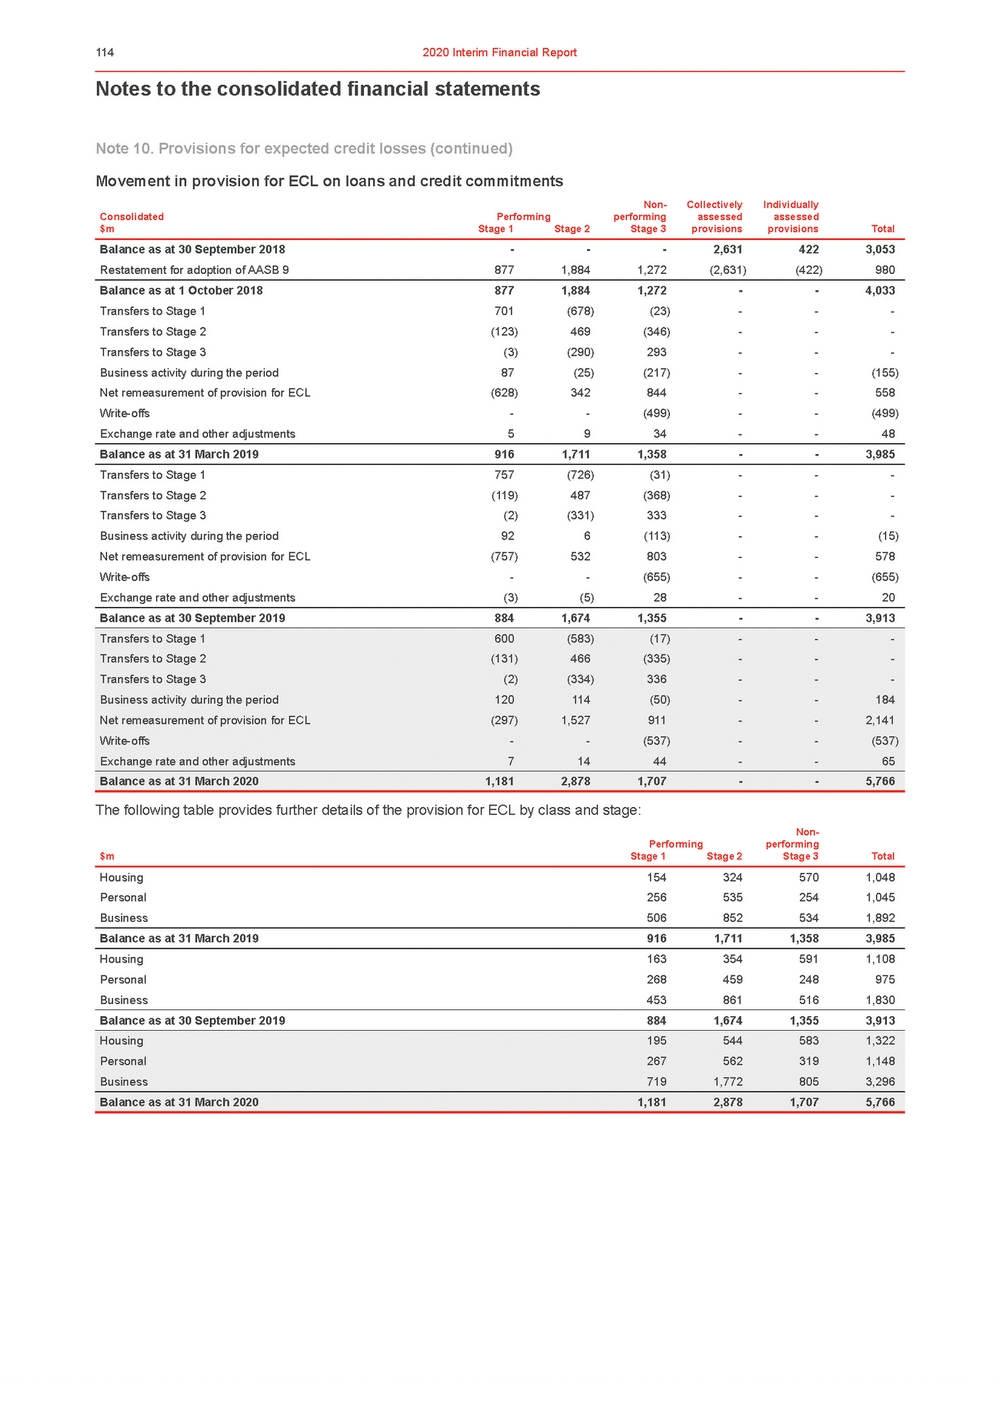 11676-3-ex1_westpac 2020 interim financial results announcement_page_119.jpg